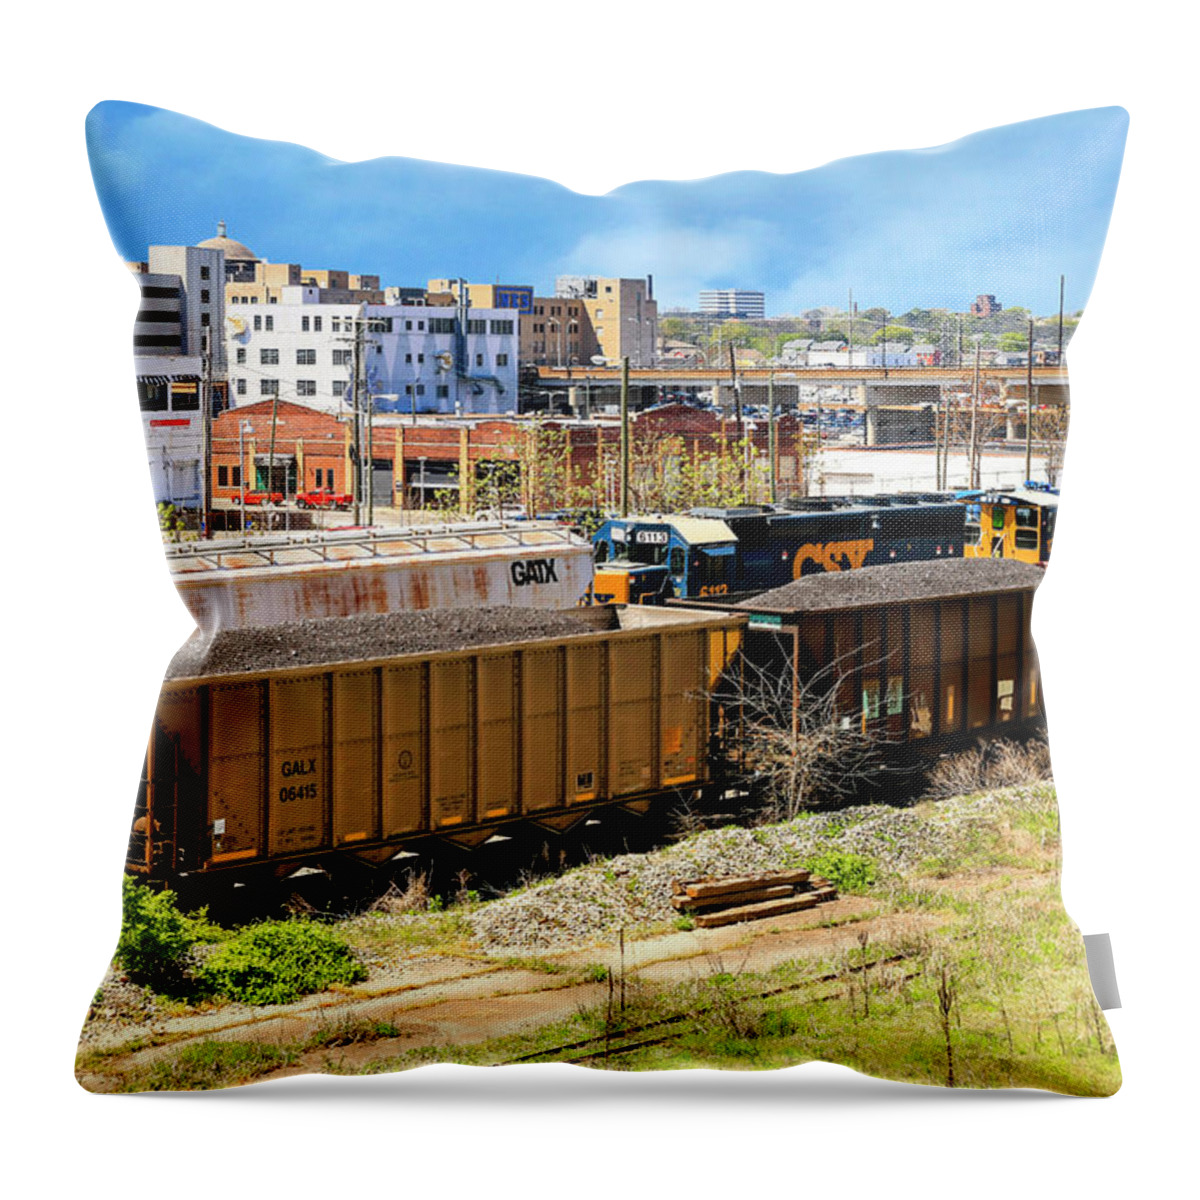 Coal Throw Pillow featuring the photograph Nashville Railyard #1 by Chris Smith